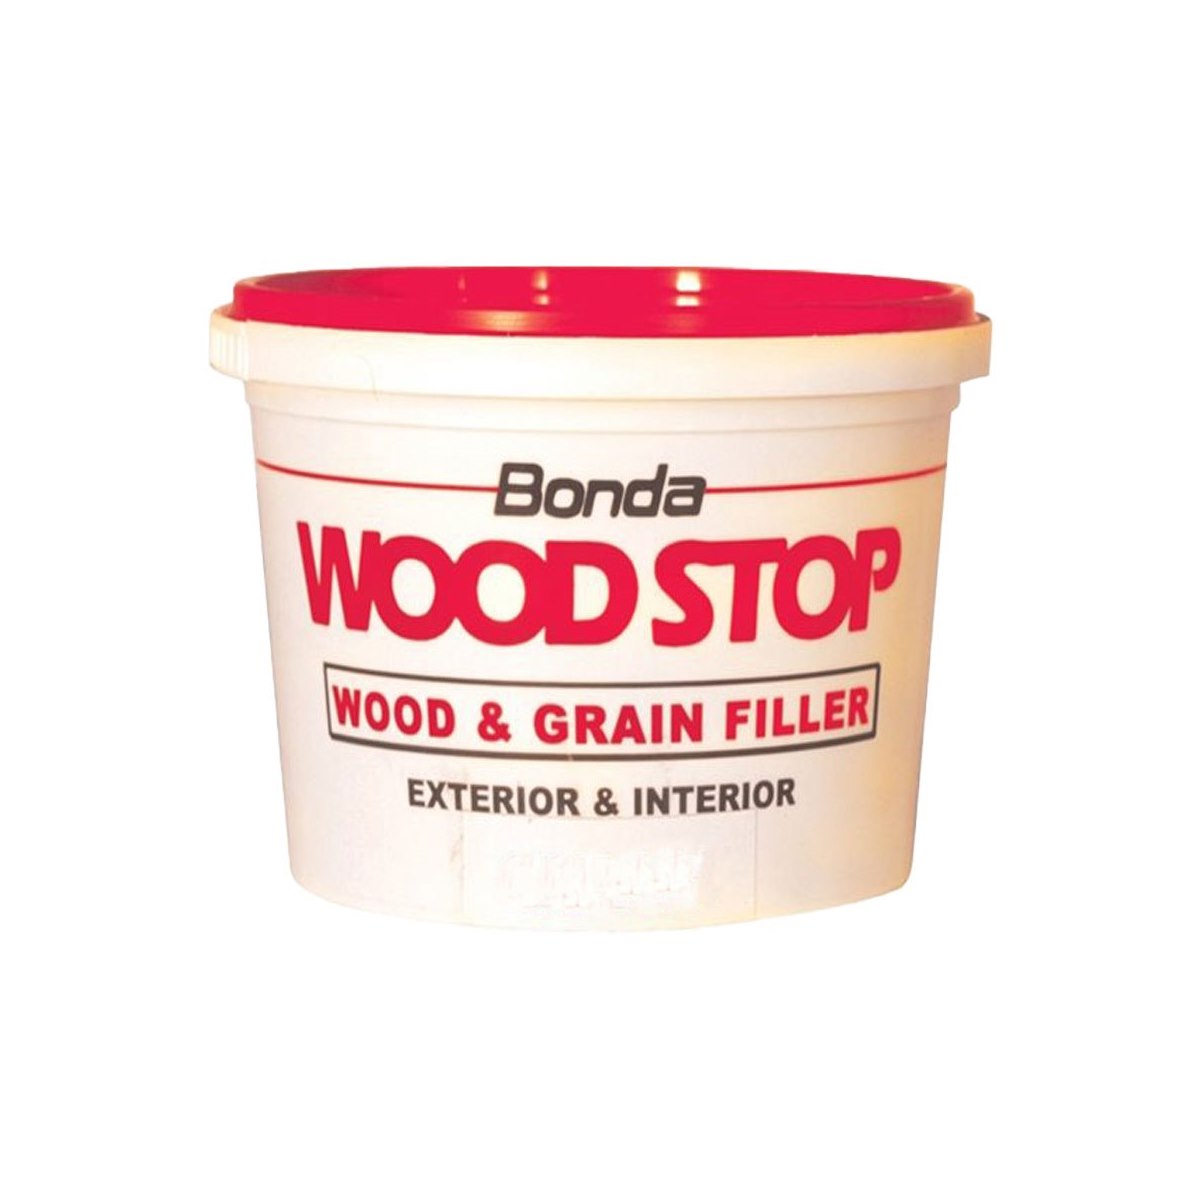 Bonda Wood Stop Stainable Wood and Grain Filler